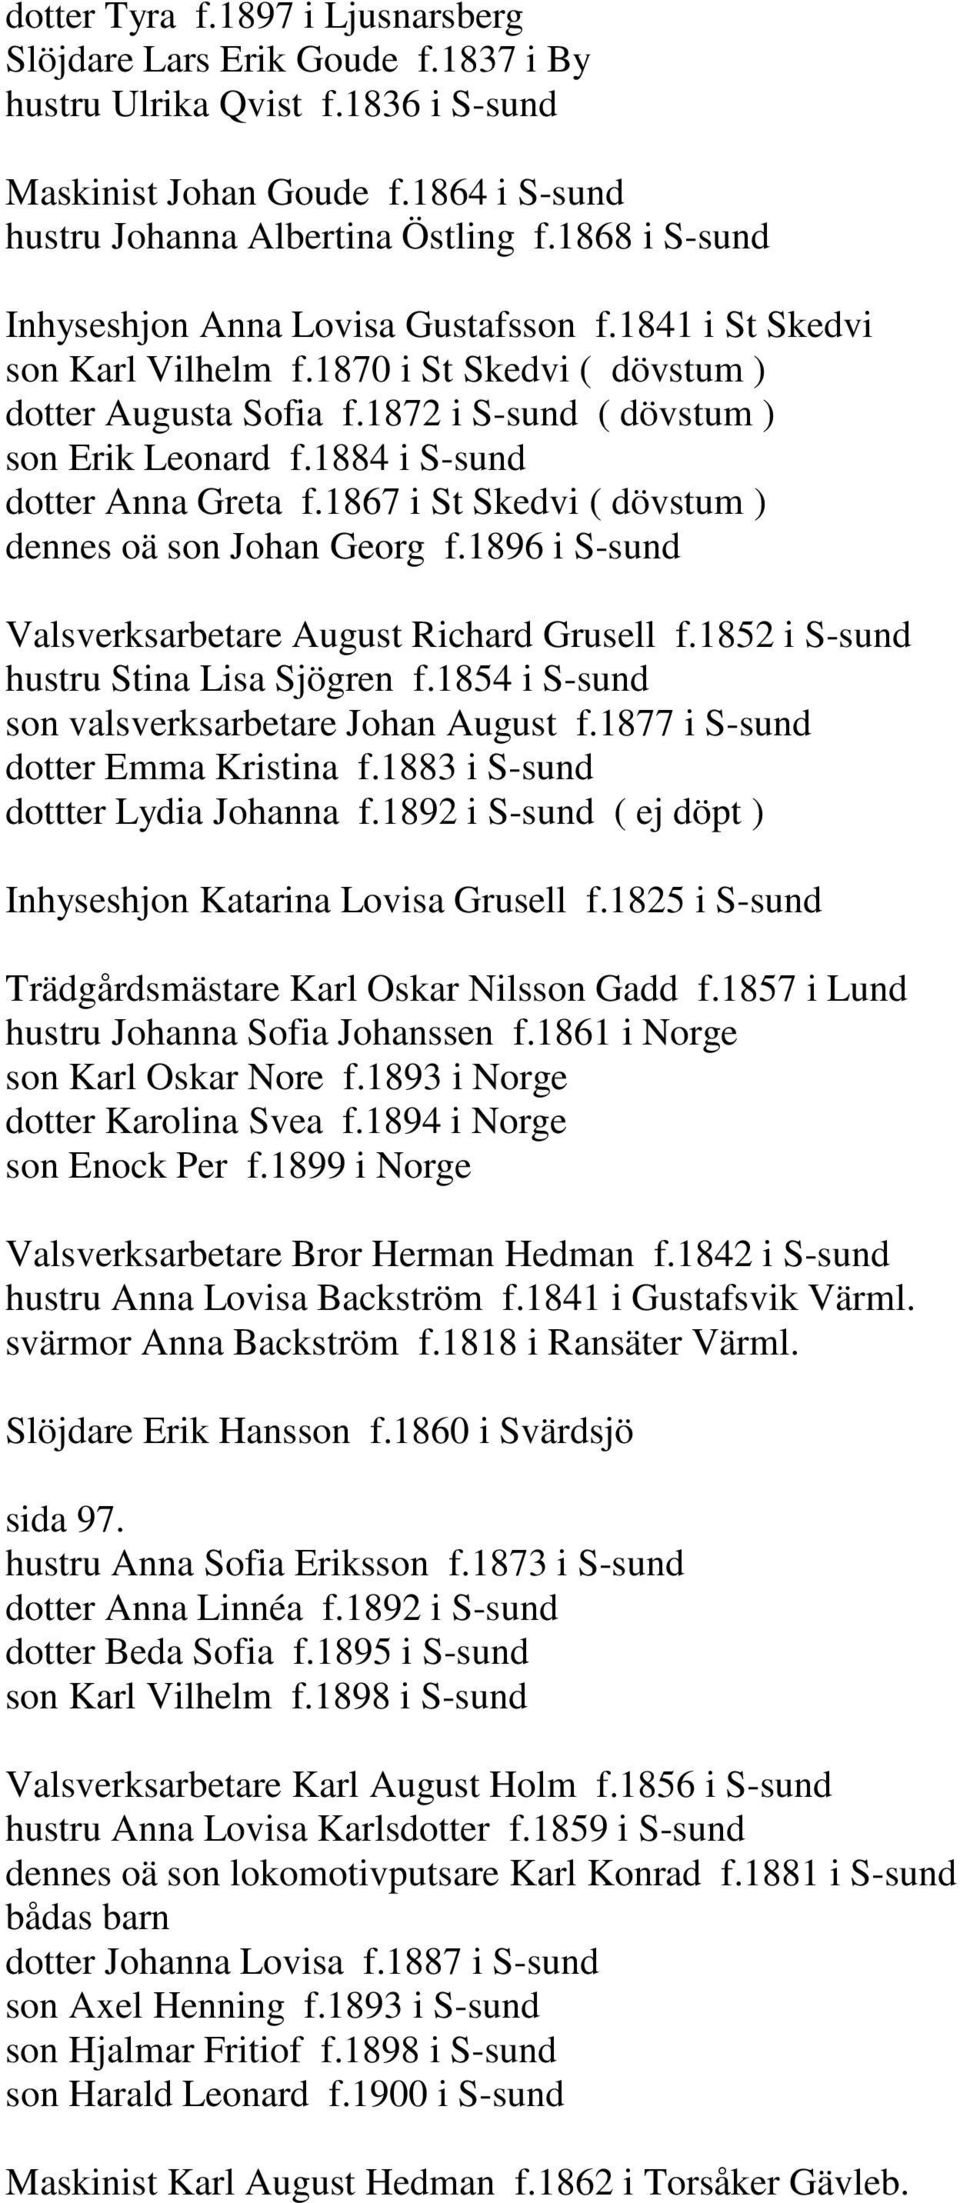 1884 i S-sund dotter Anna Greta f.1867 i St Skedvi ( dövstum ) dennes oä son Johan Georg f.1896 i S-sund Valsverksarbetare August Richard Grusell f.1852 i S-sund hustru Stina Lisa Sjögren f.